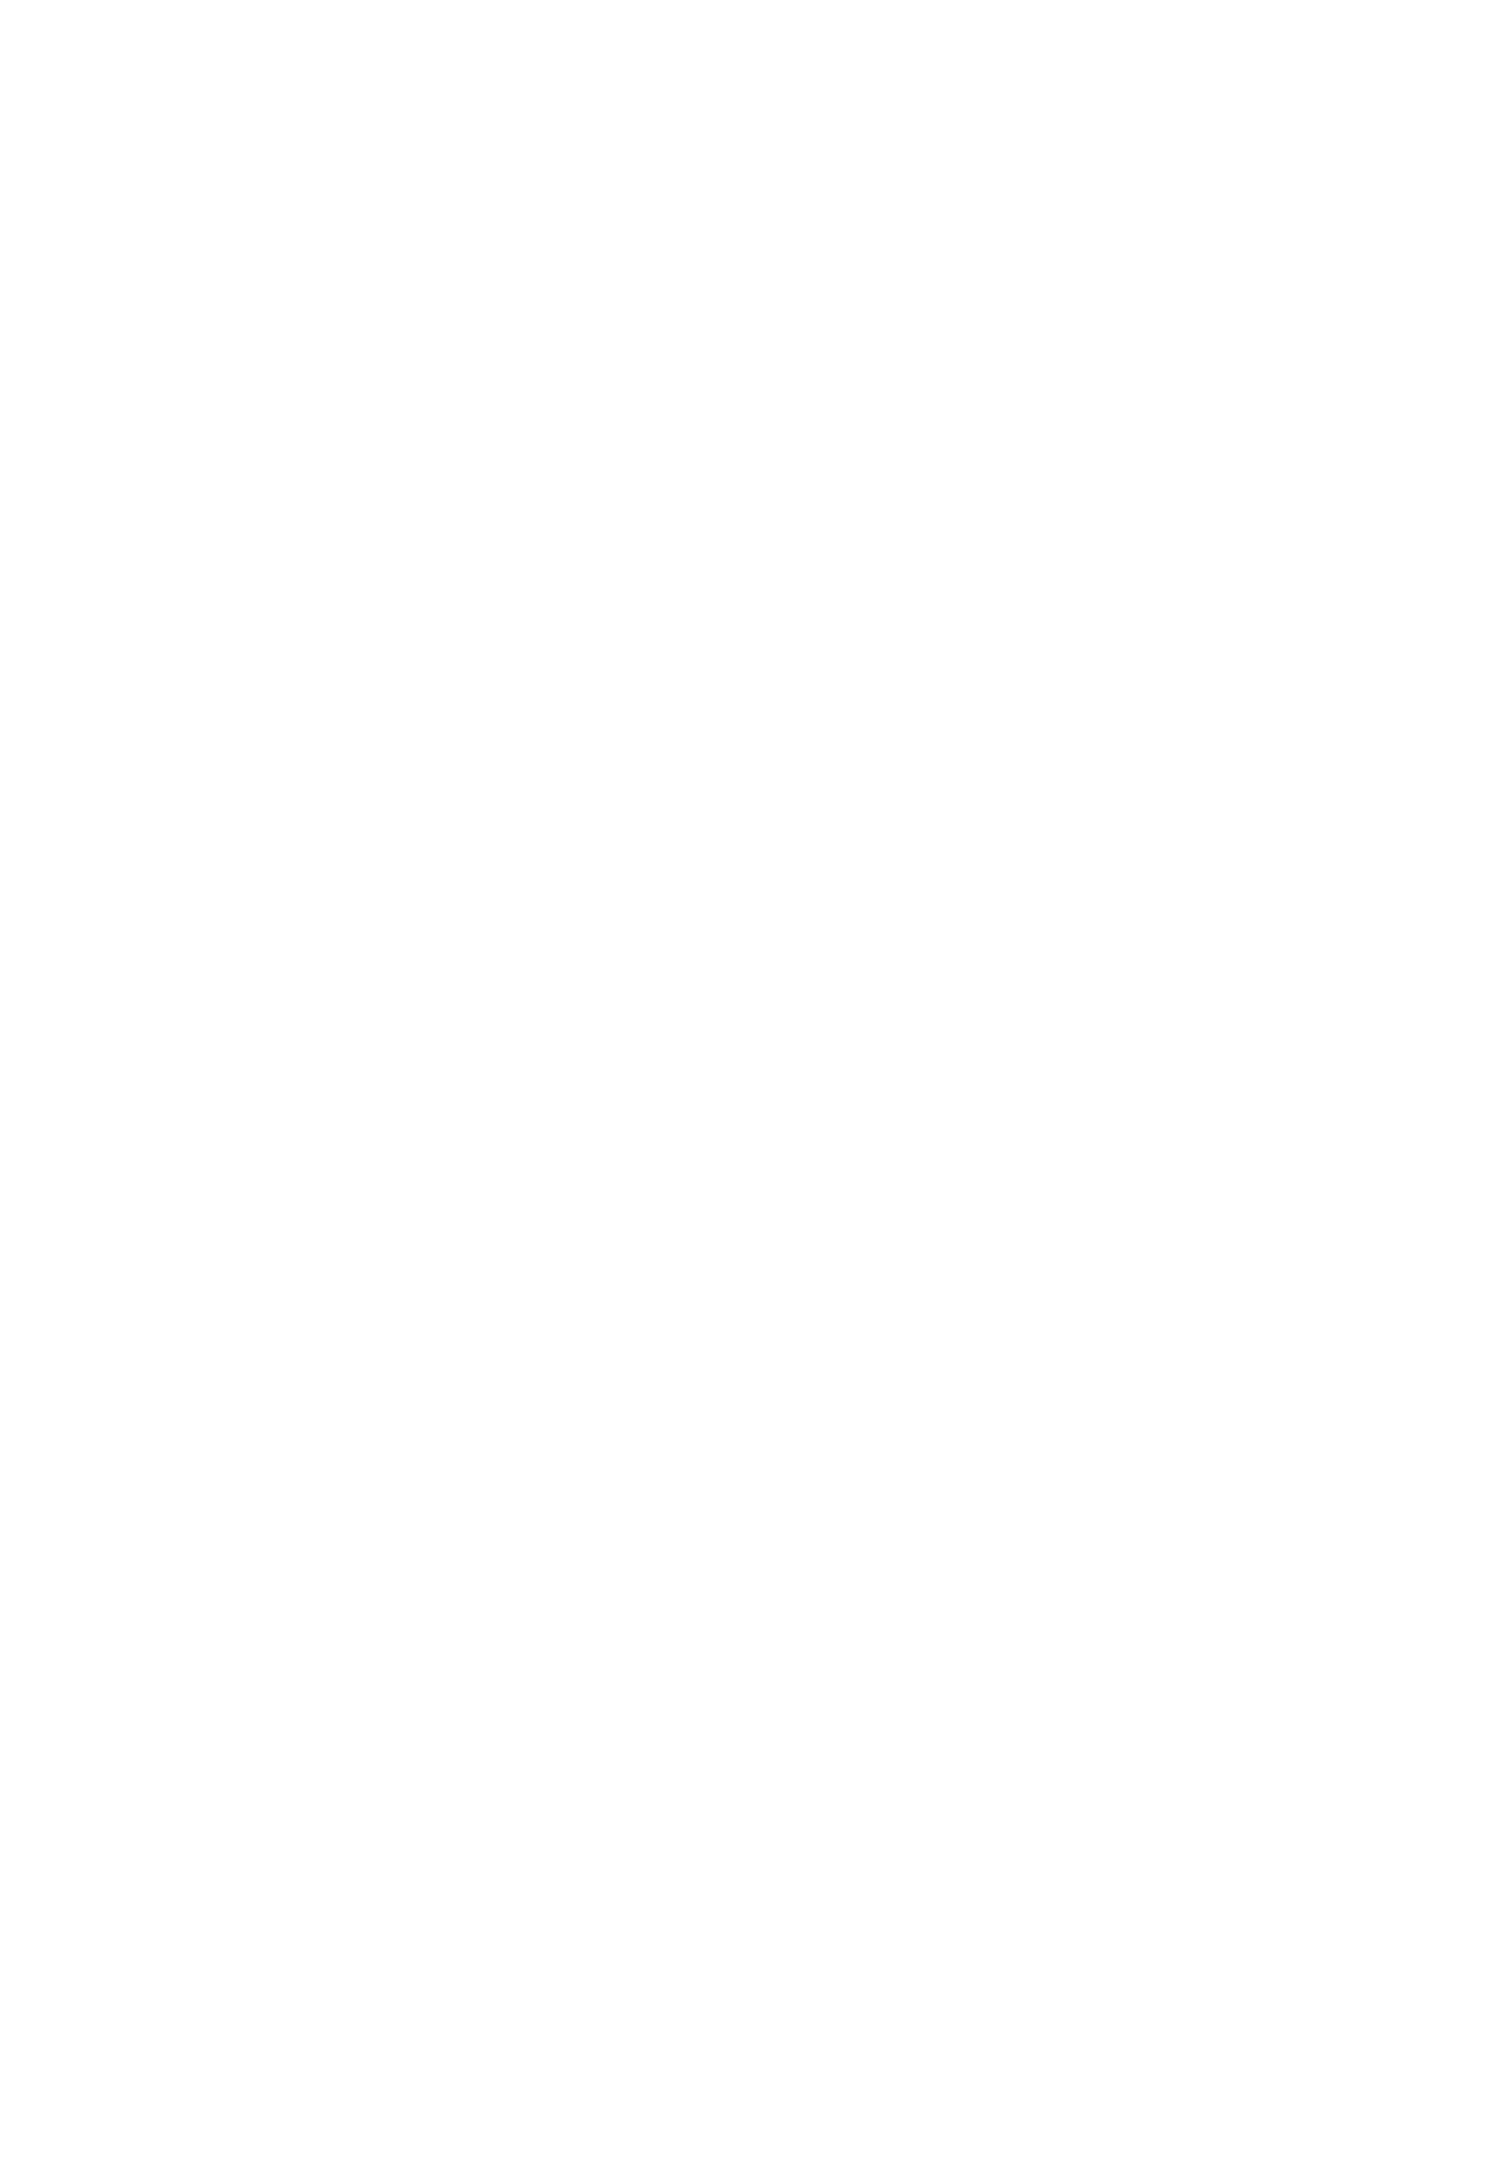 Graffiti Restro Cafe + Wine Bar